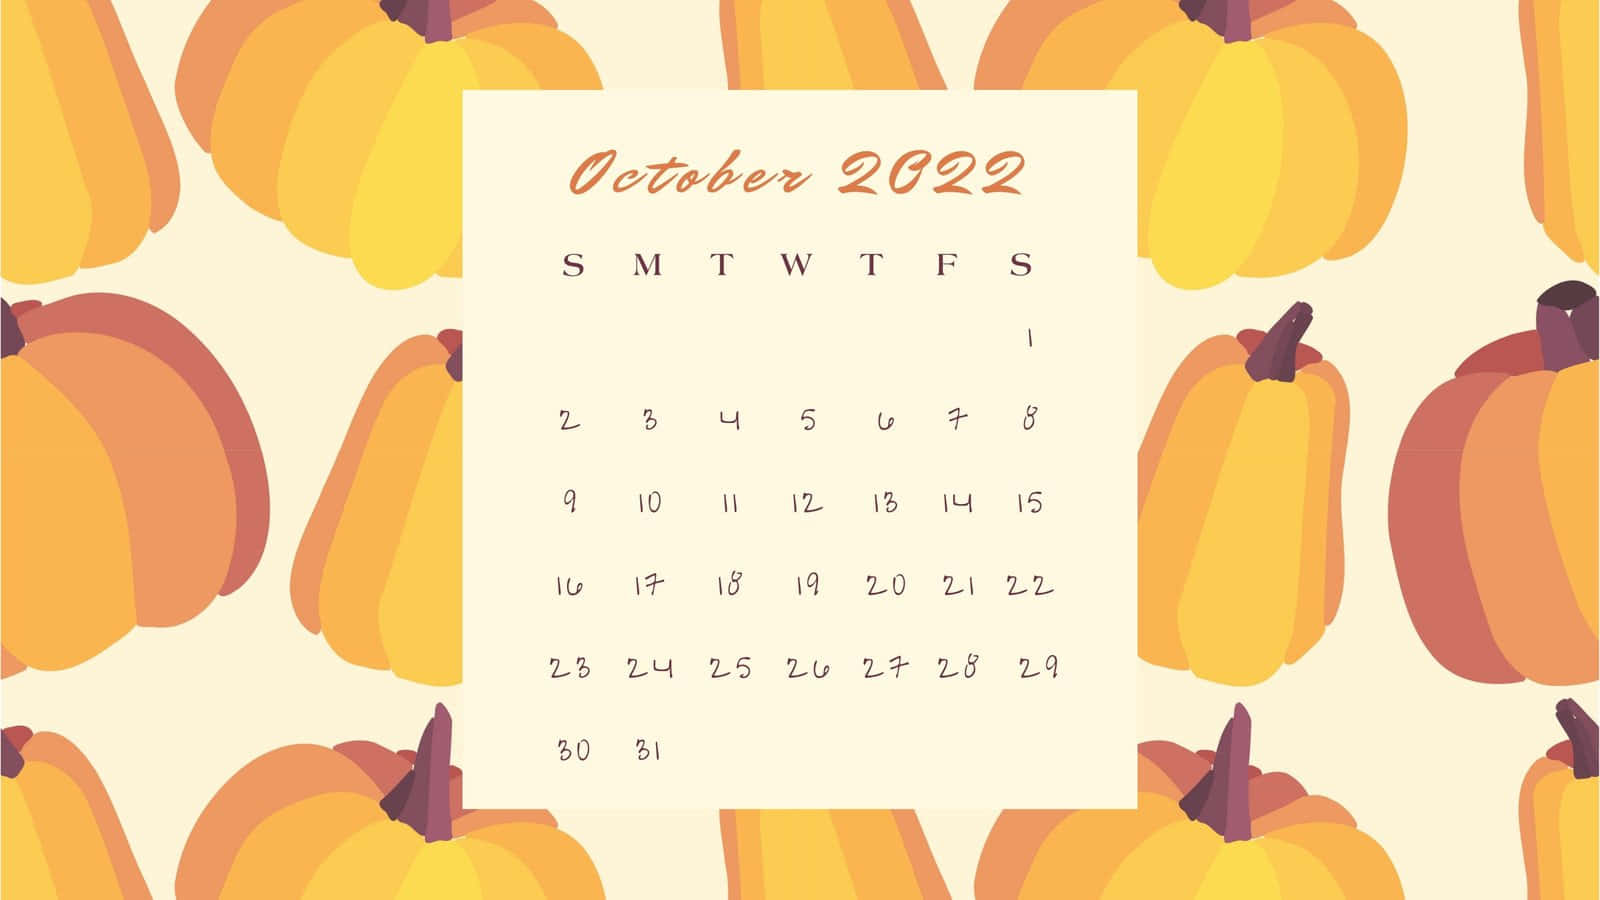 October 2020 kalender med gulerødder på det. Wallpaper